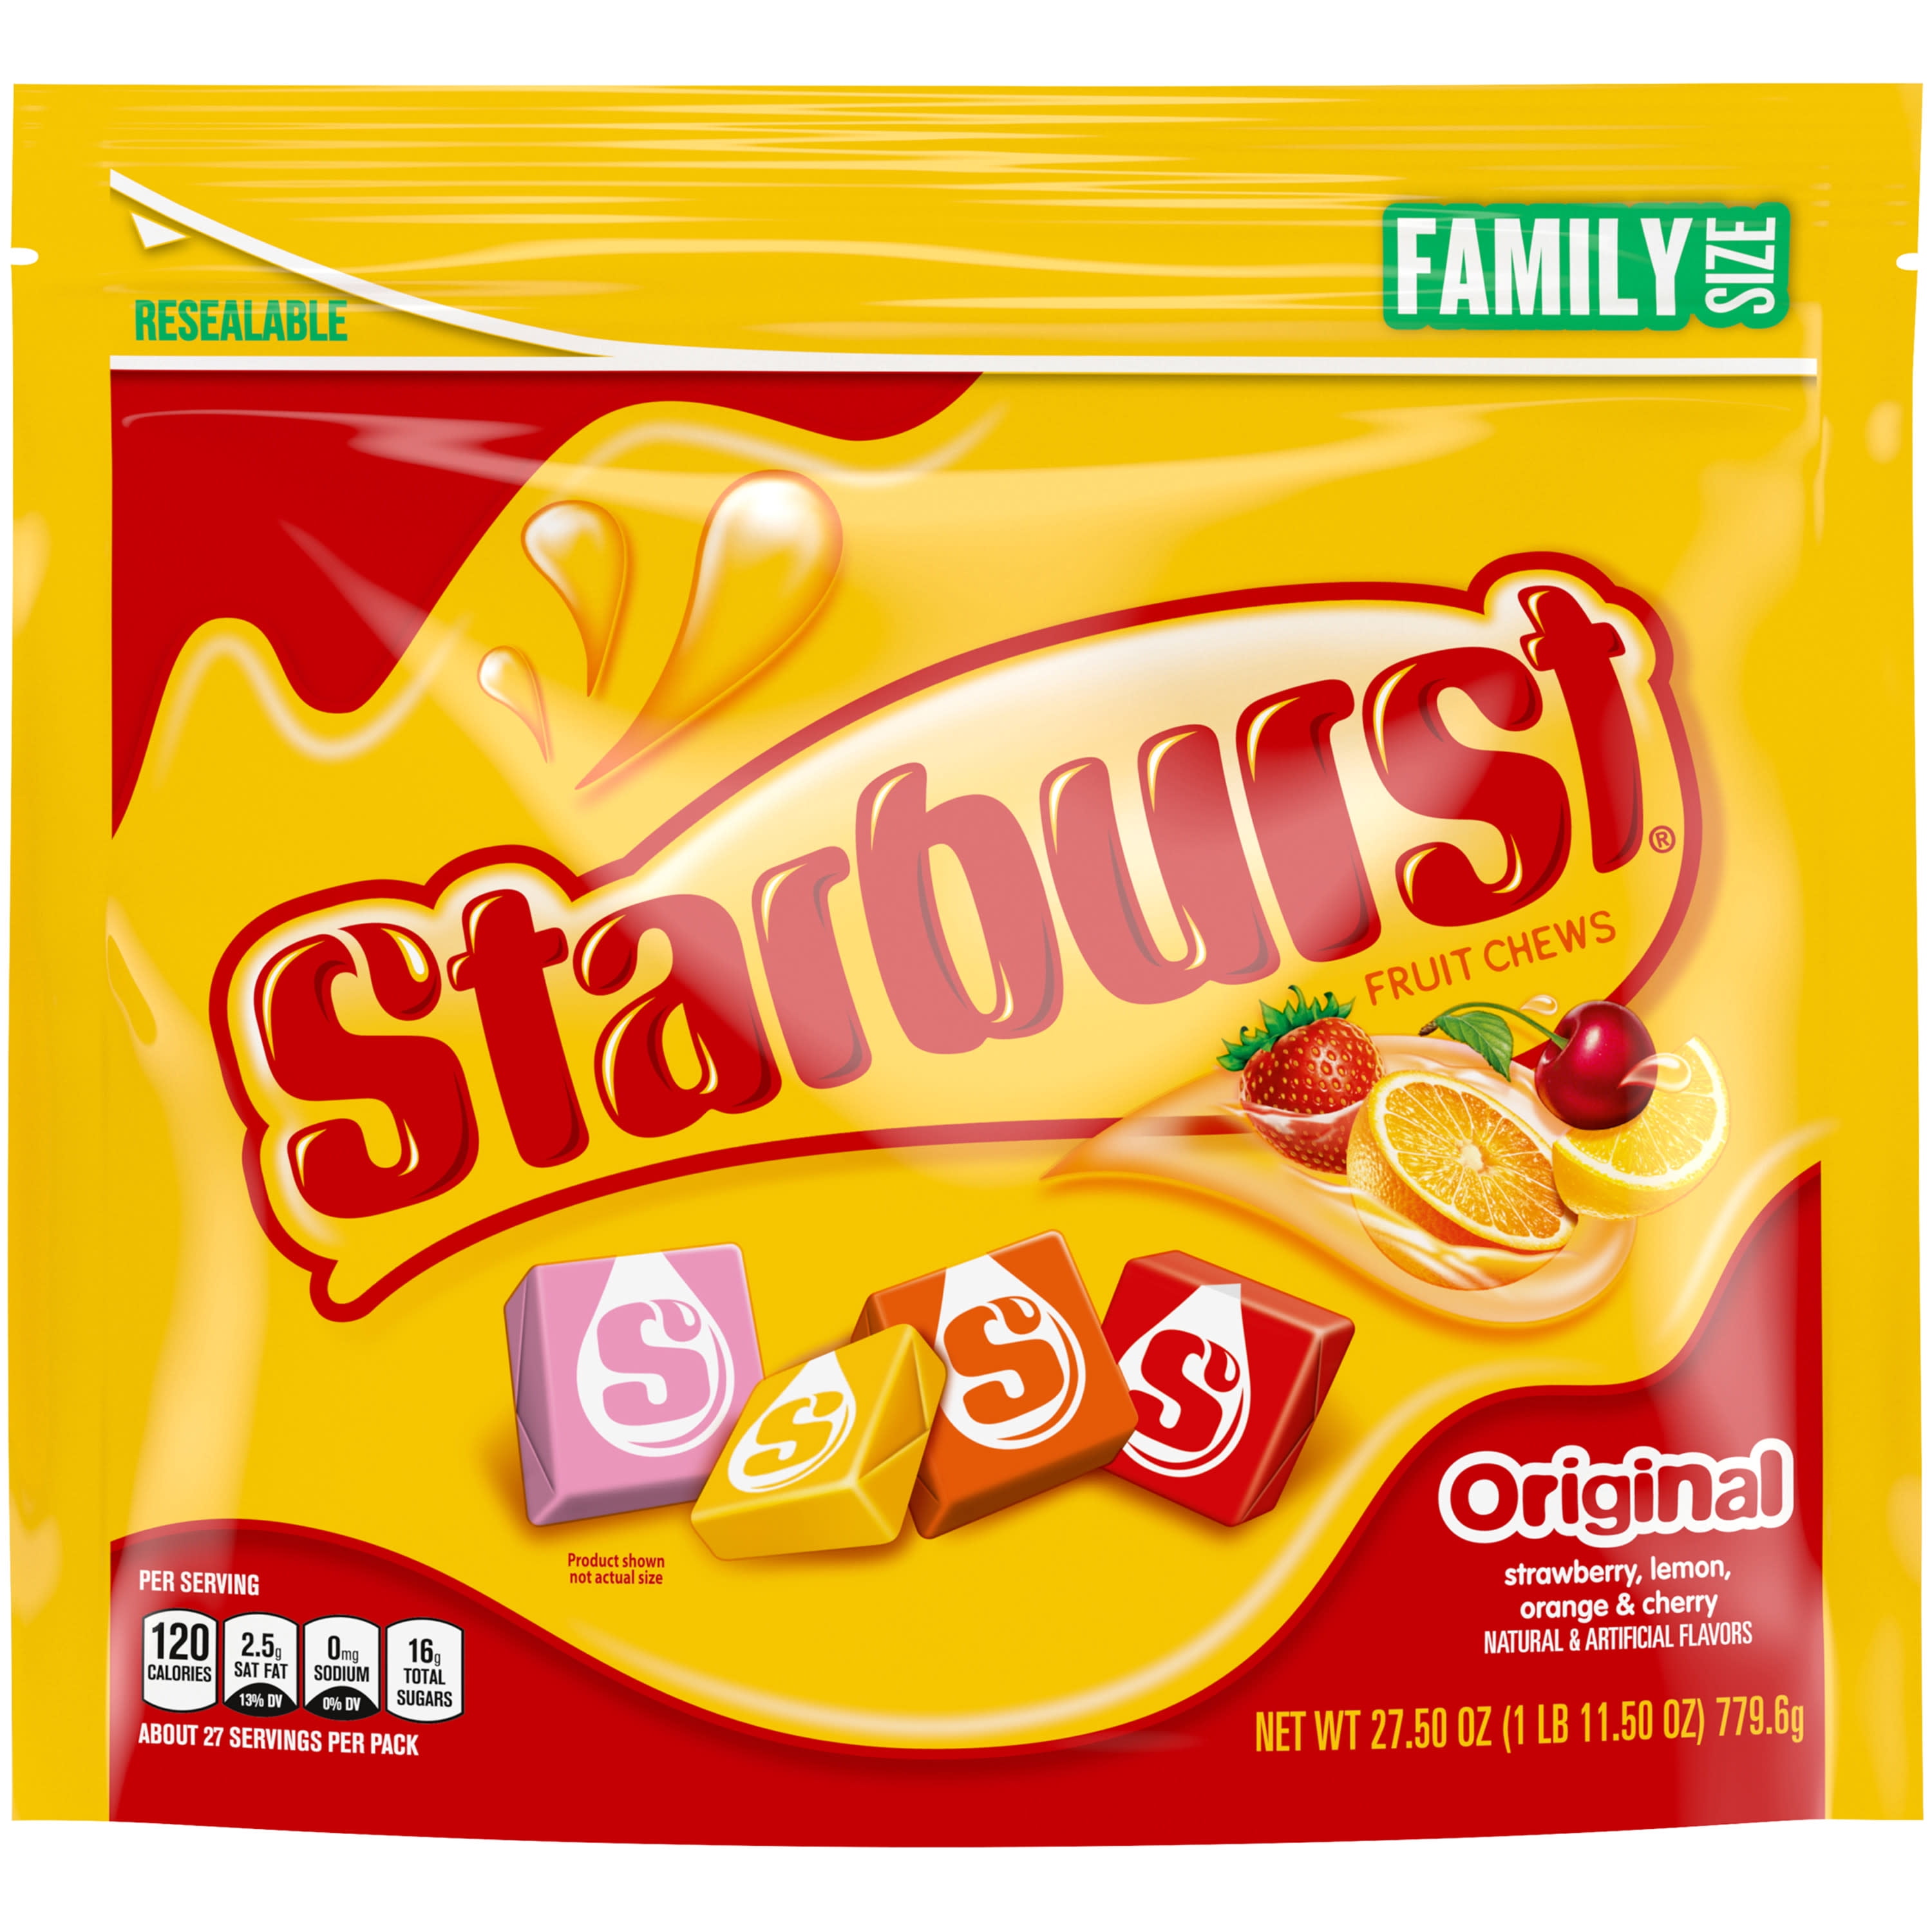 Starburst Original Fruit Chews Gummy Candy Family Size - 27.5 oz Bag